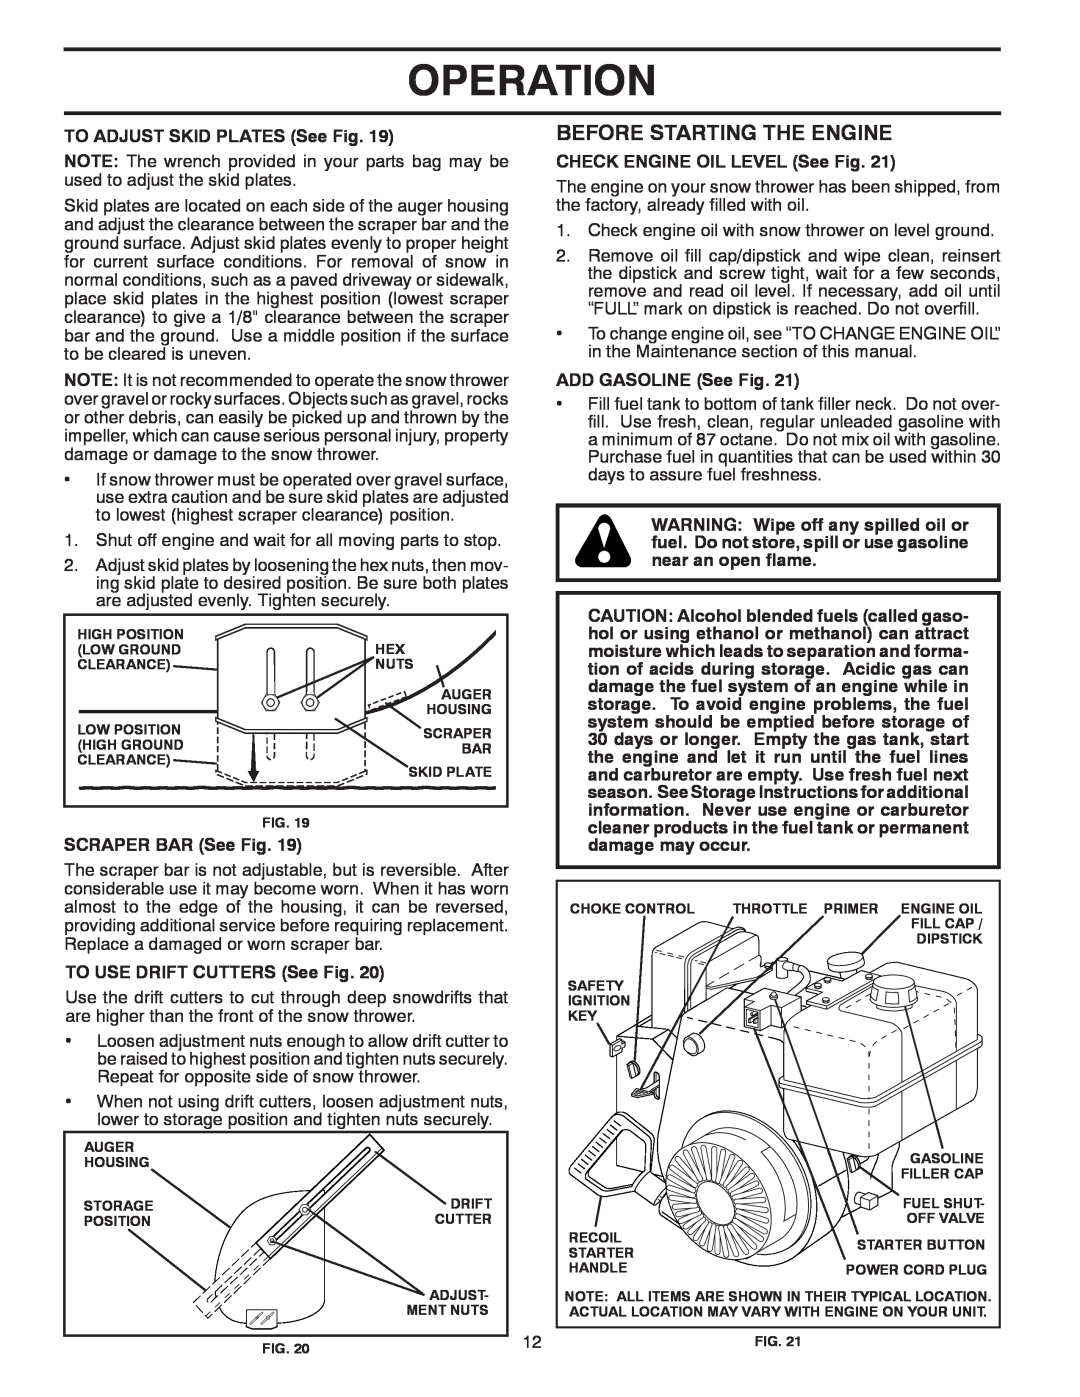 Husqvarna 1130SB owner manual Before Starting The Engine, Operation, TO ADJUST SKID PLATES See Fig, SCRAPER BAR See Fig 